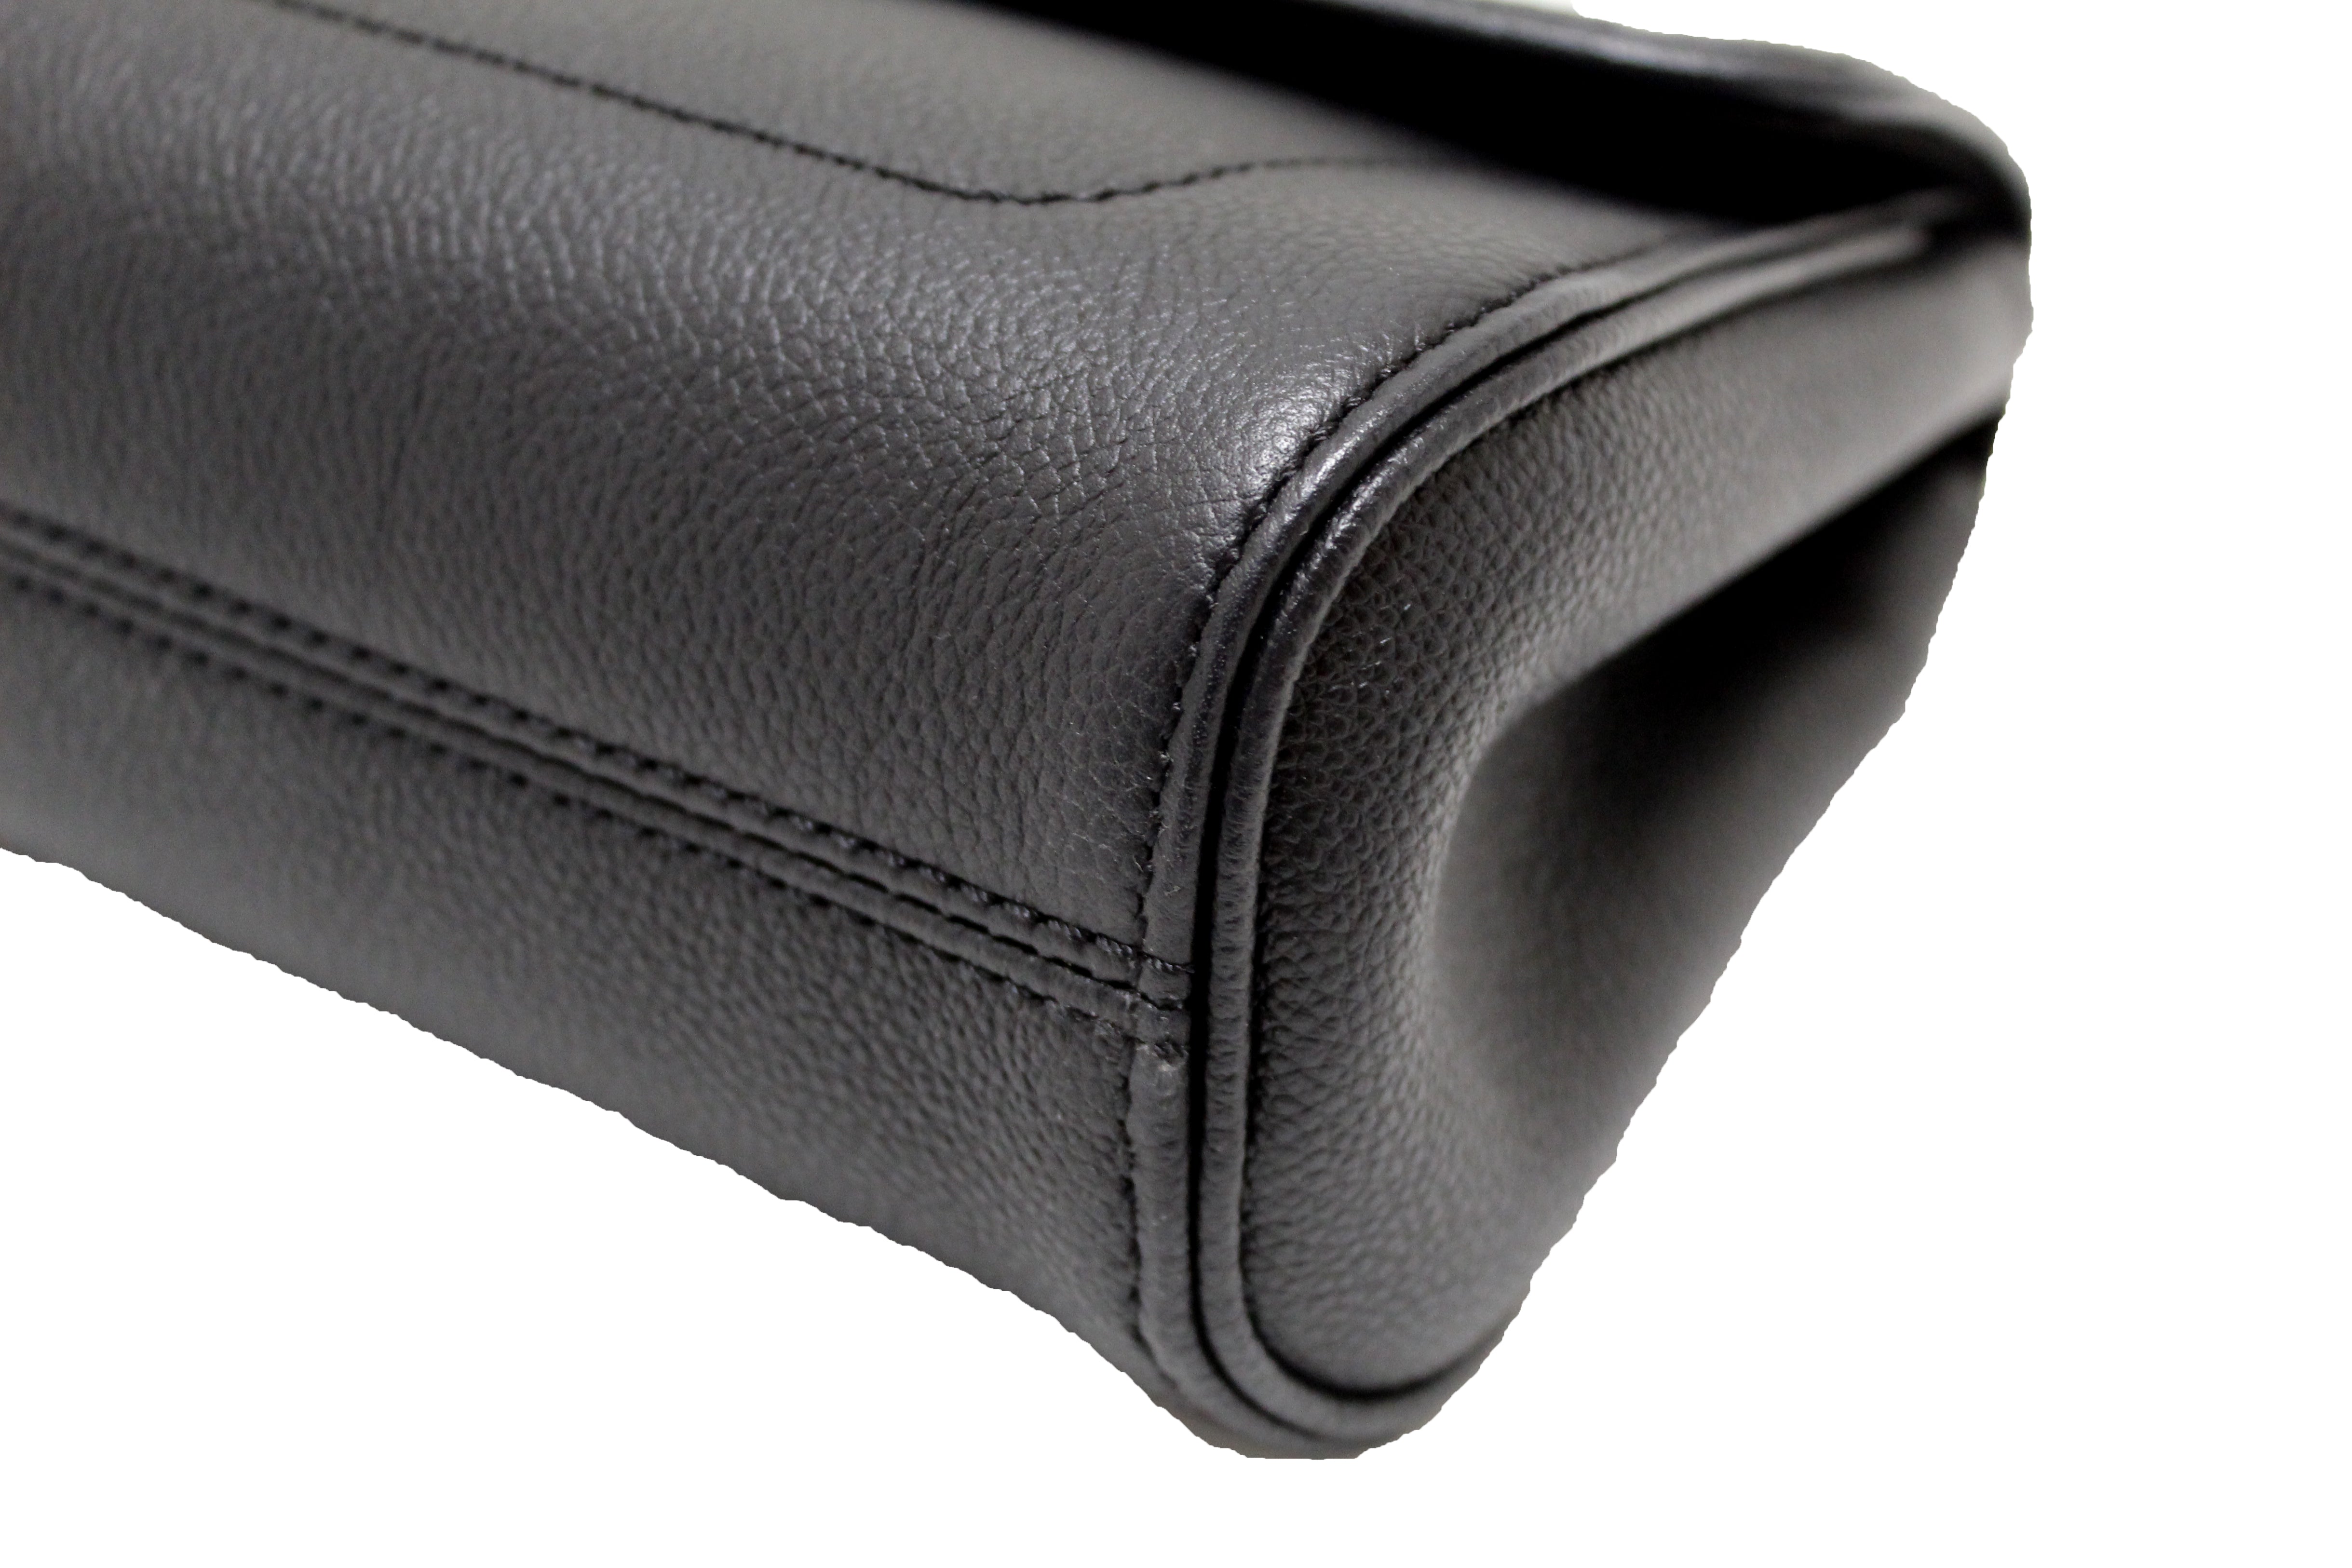 Louis Vuitton Black Empreinte Saint Germain MM – Luxmary Handbags